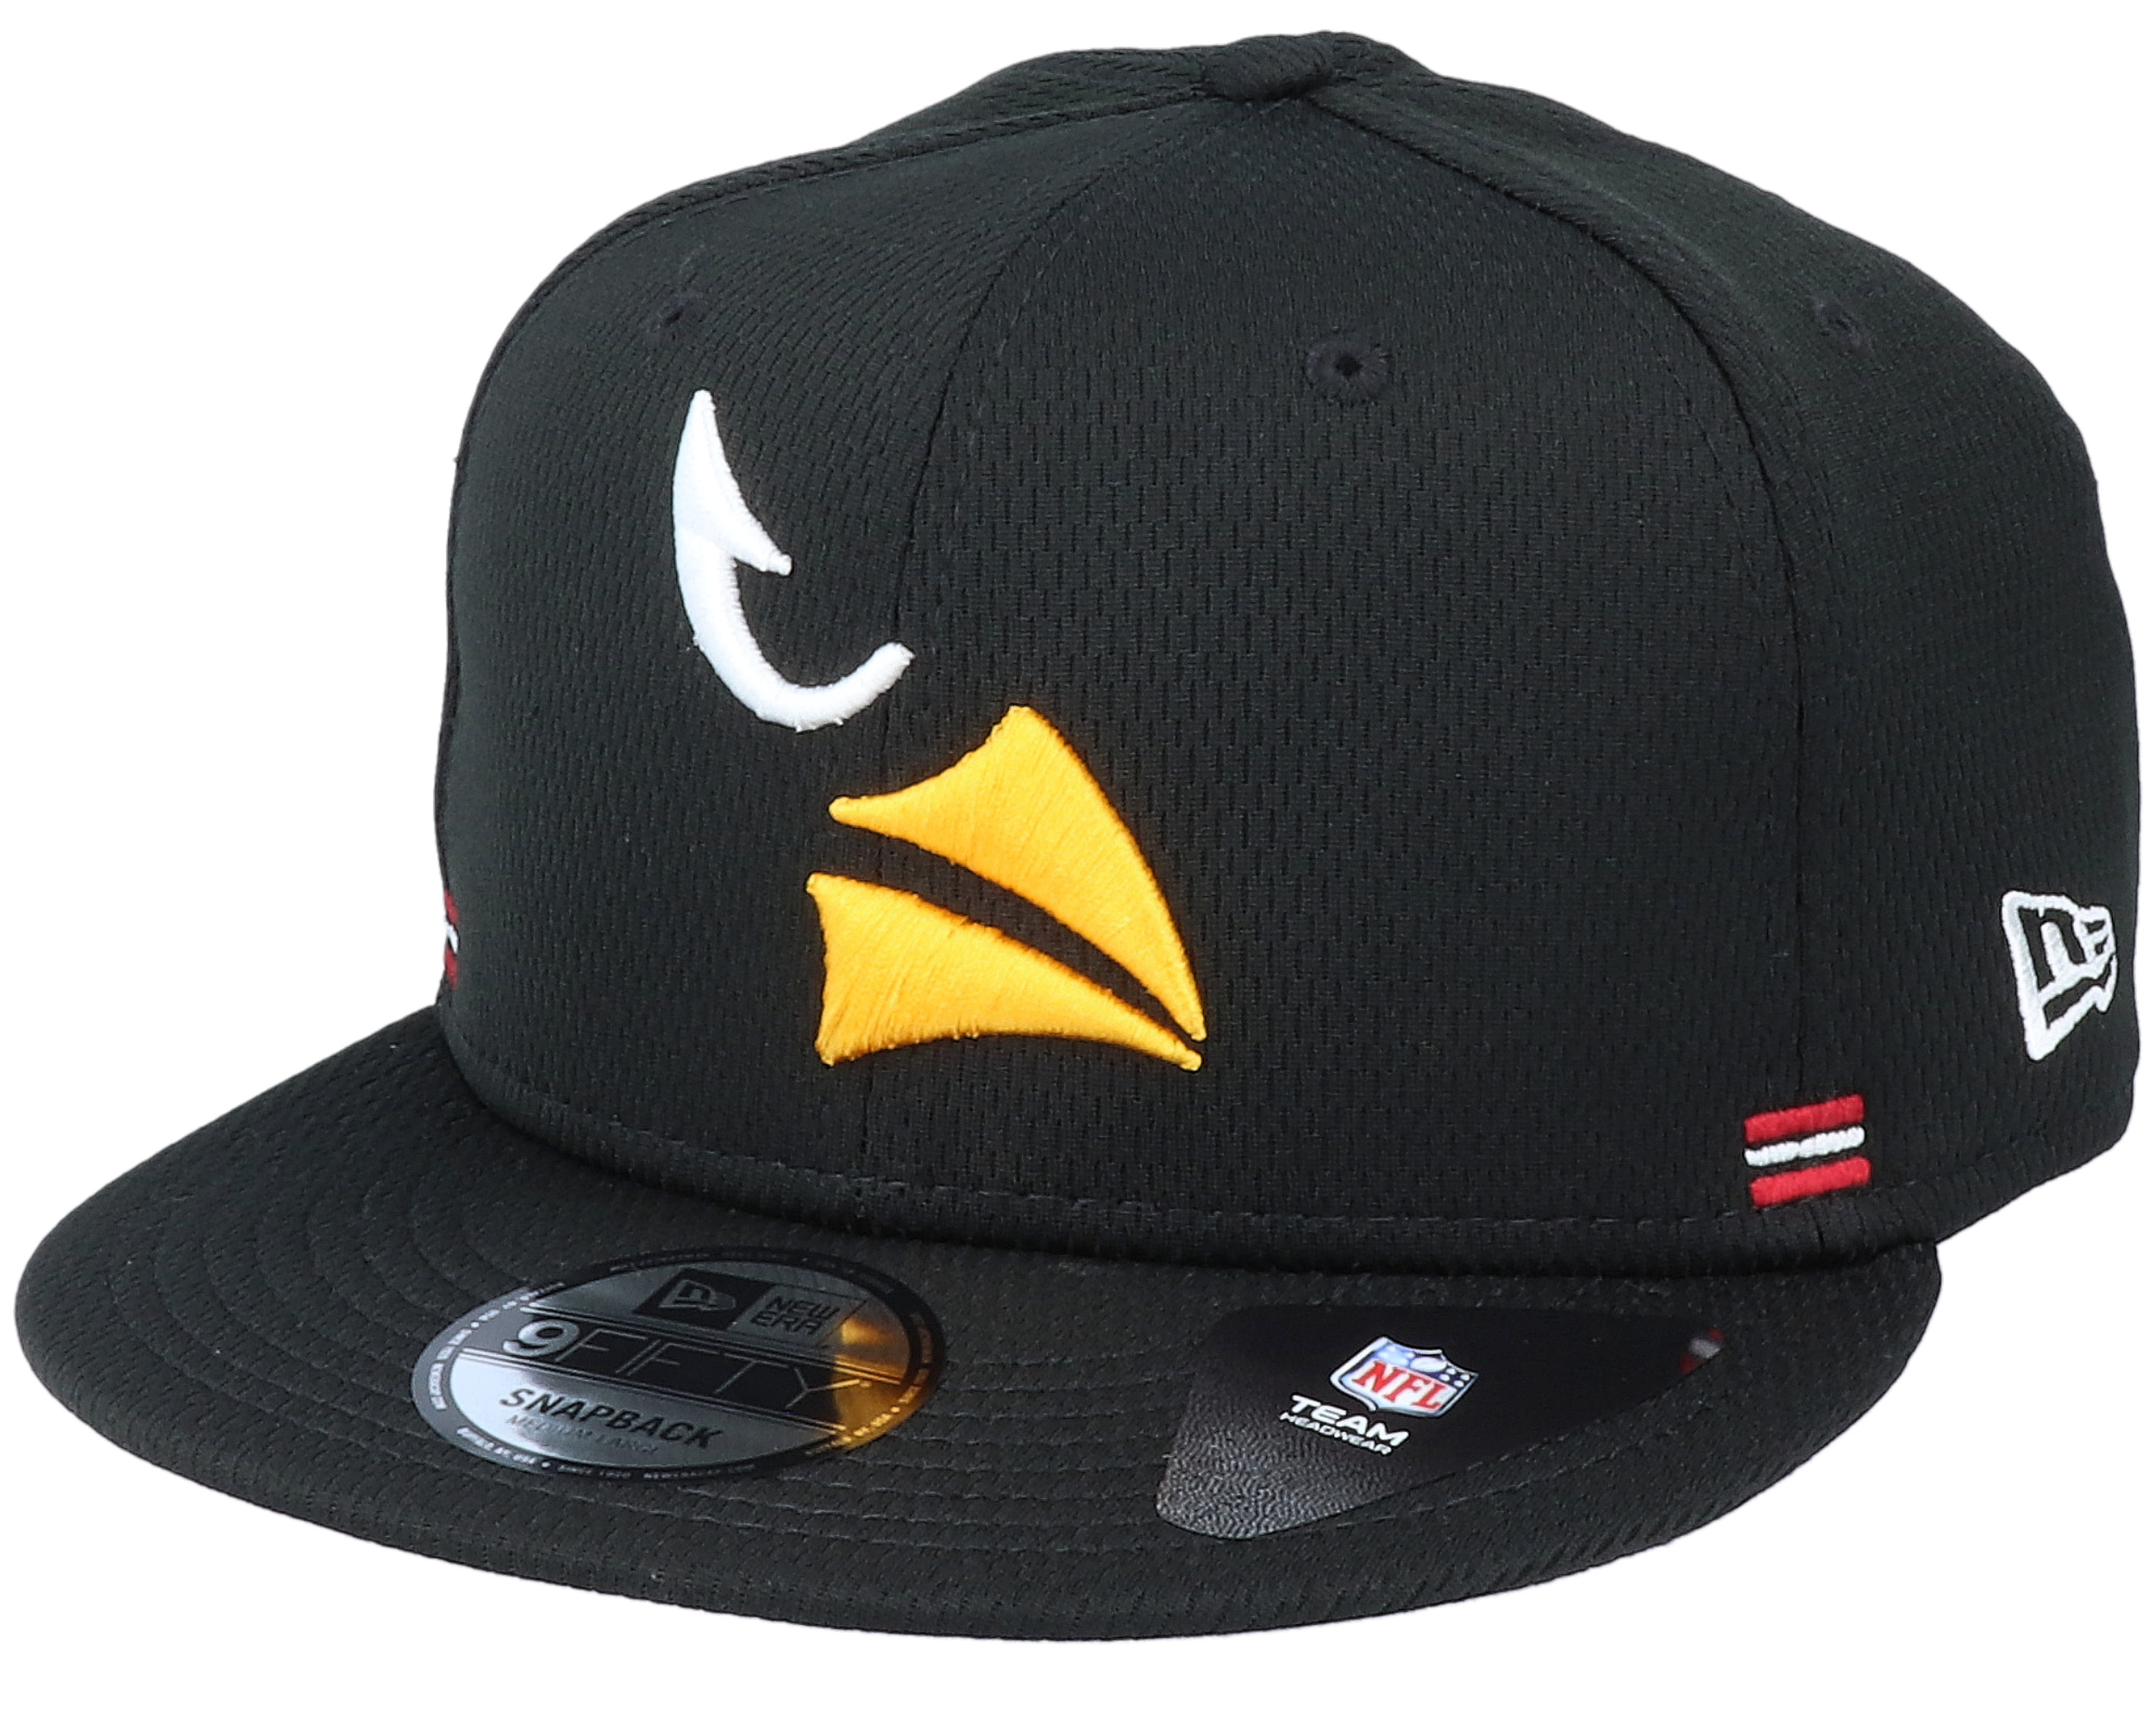 Arizona Cardinals Basic OTC 9FIFTY Snapback Hat